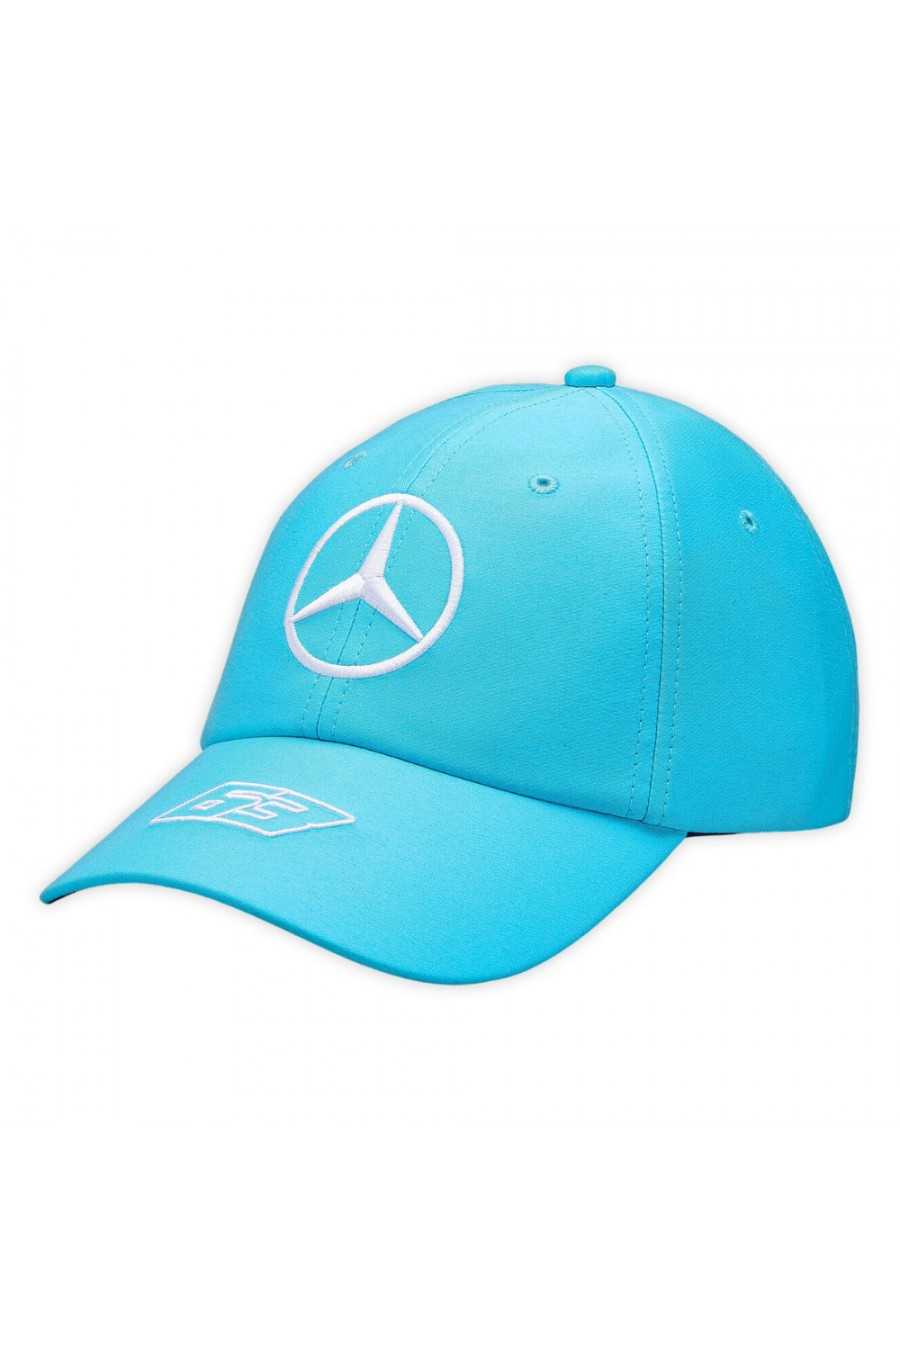 George Russell Mercedes F1 Blue Cap | GPBox